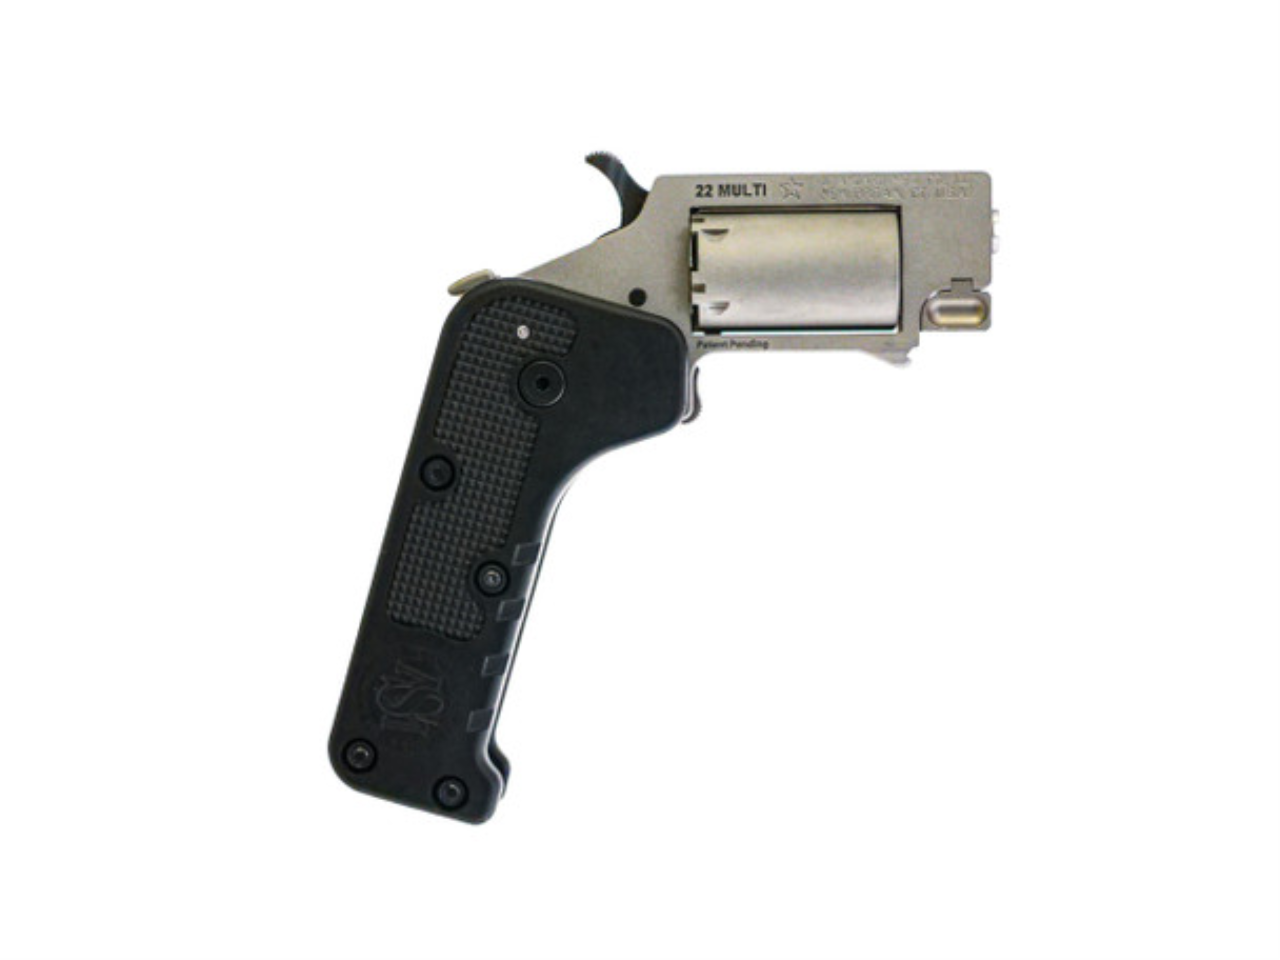 Switch-Pistole, Standard Manufacturing, Kal. .22LR, 5 Schuss